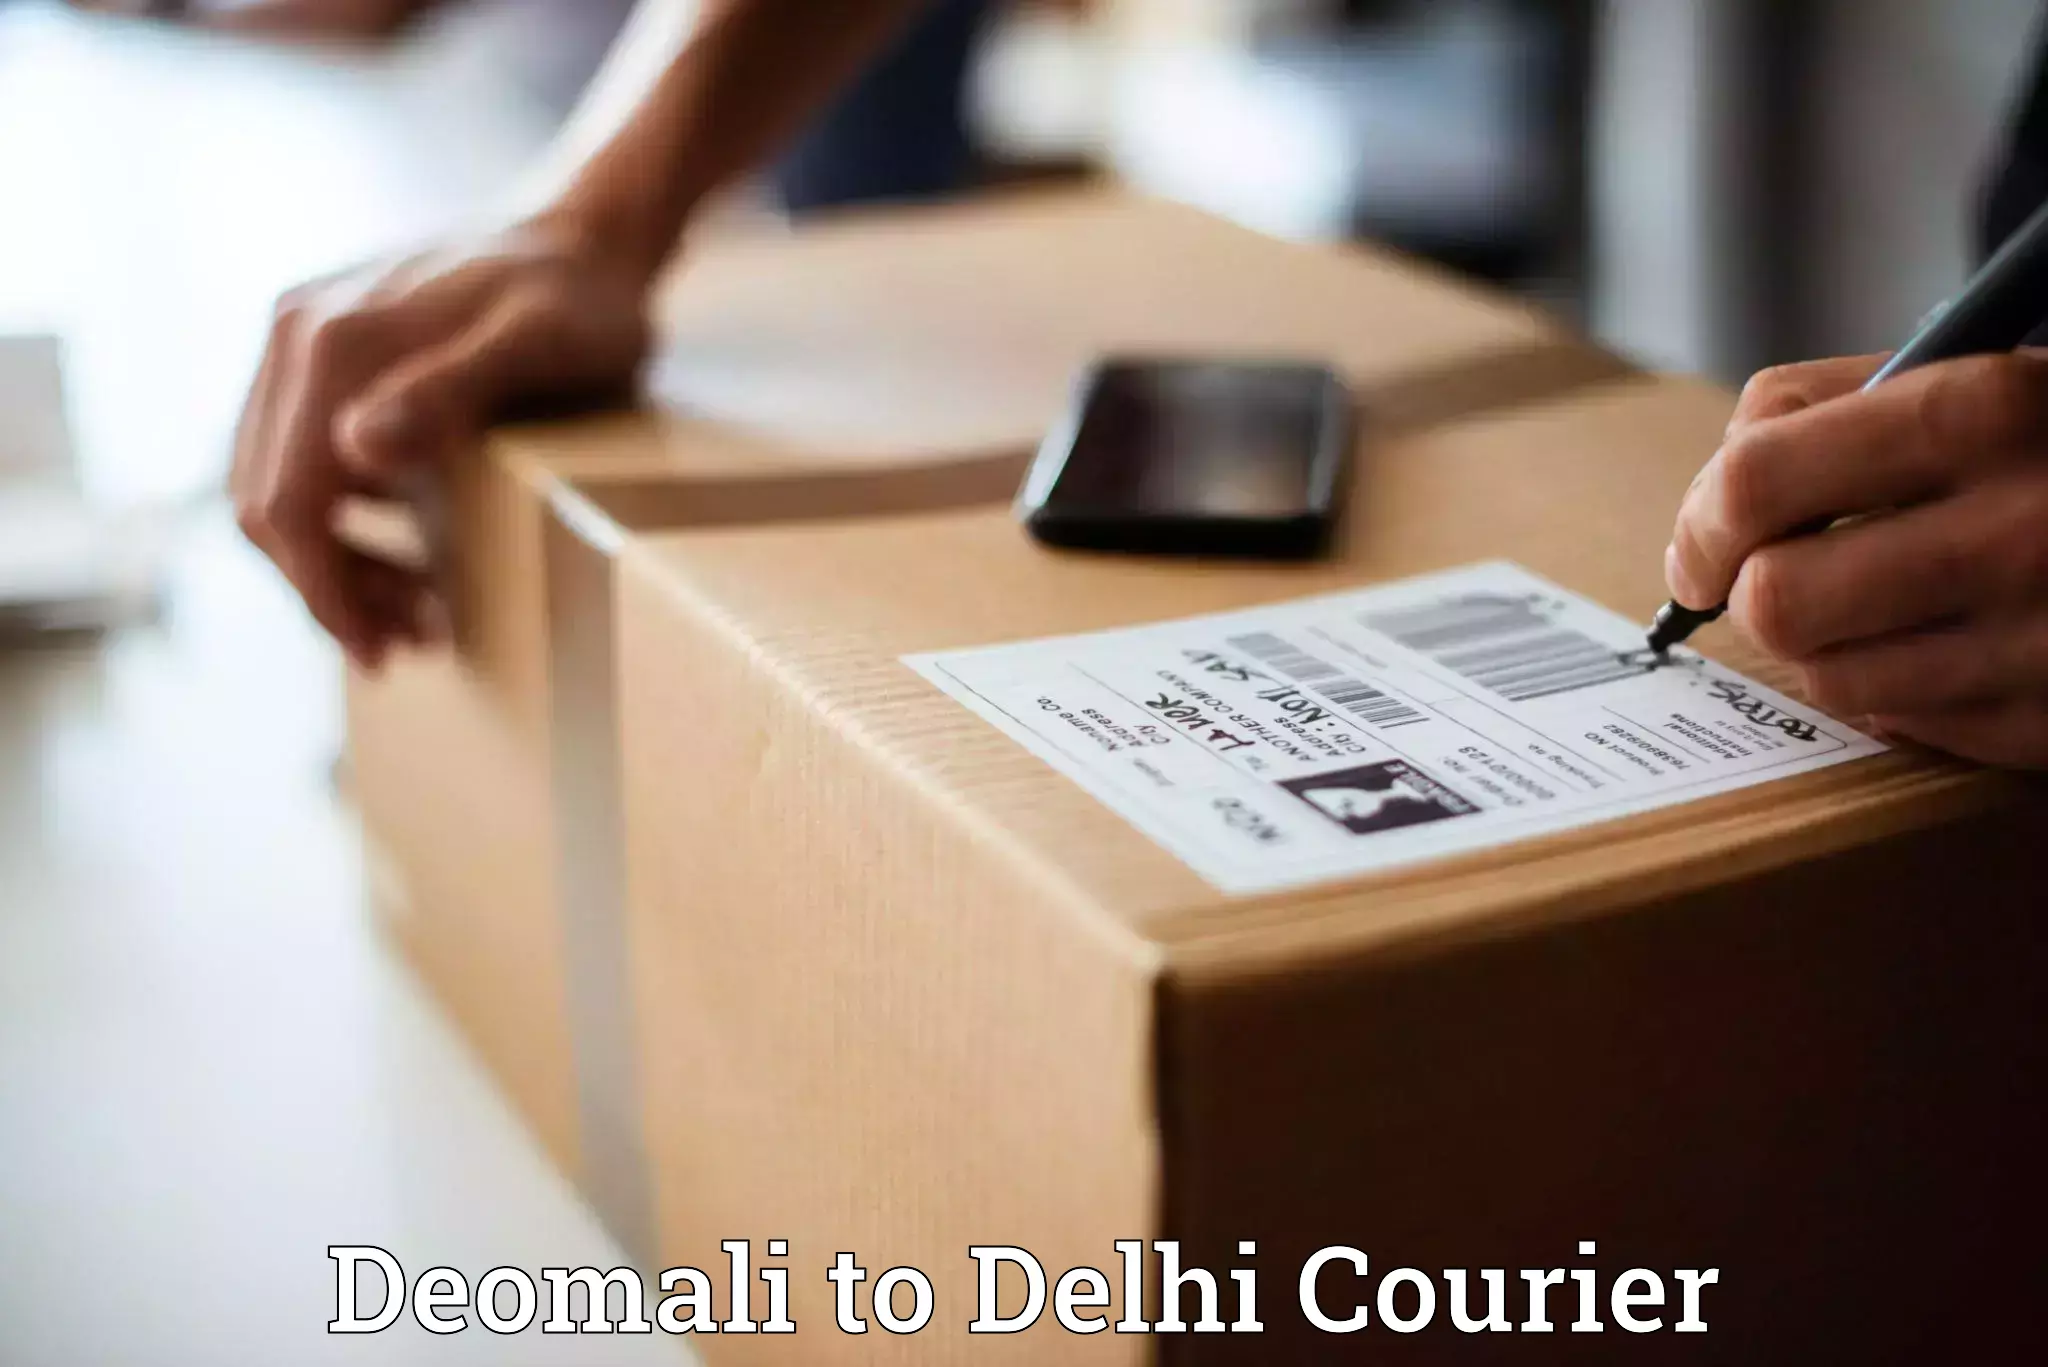 Nationwide delivery network Deomali to Delhi